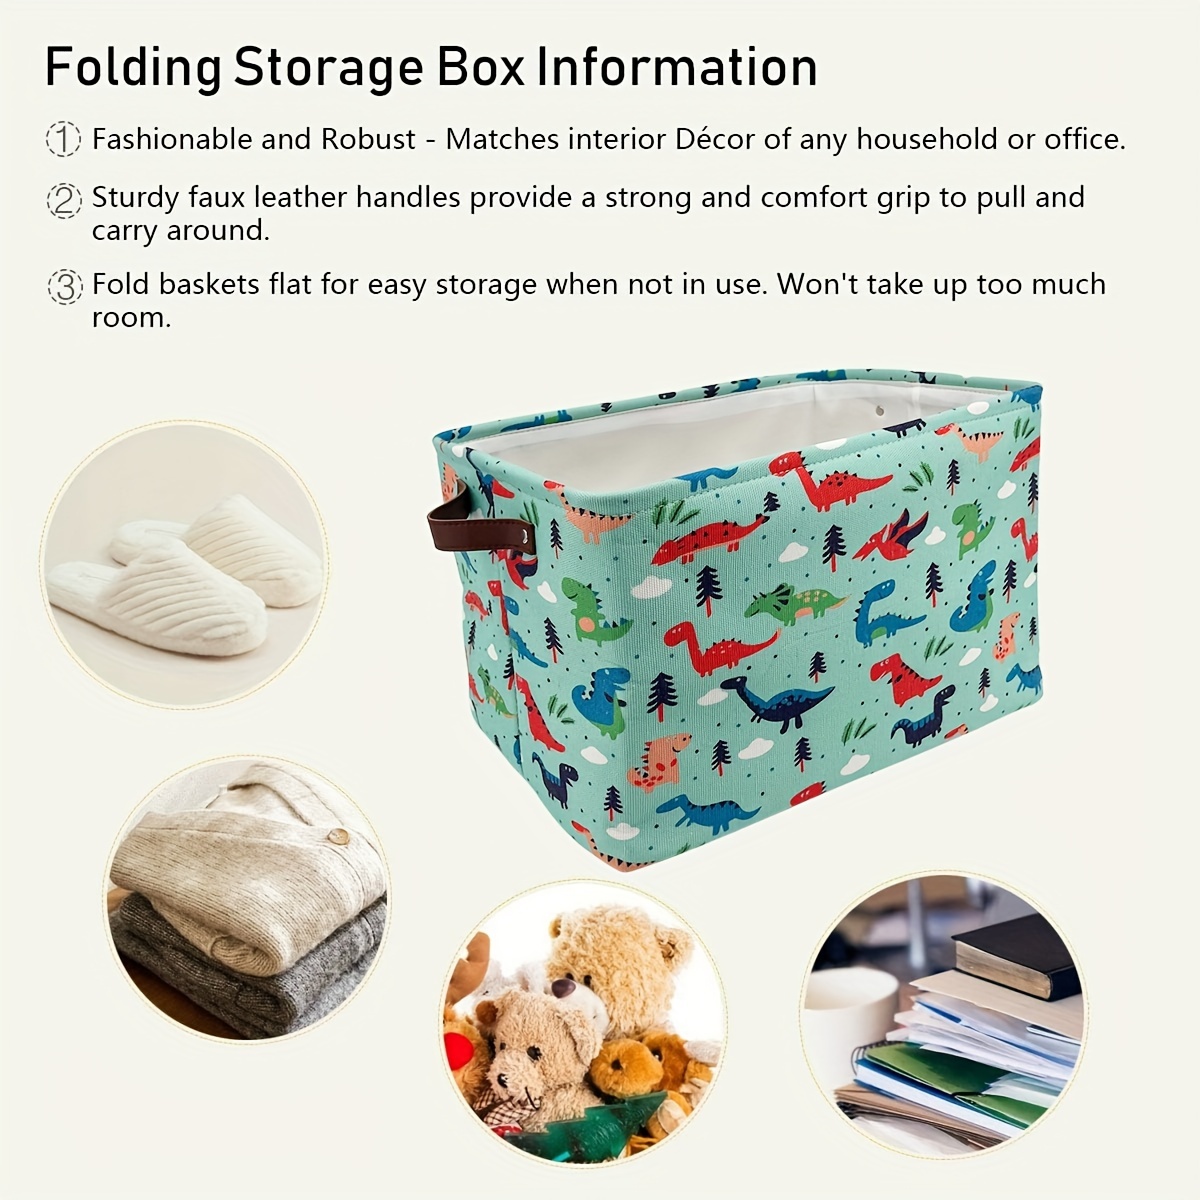 Sew Amazing Fabric Storage Baskets that Fold Up!